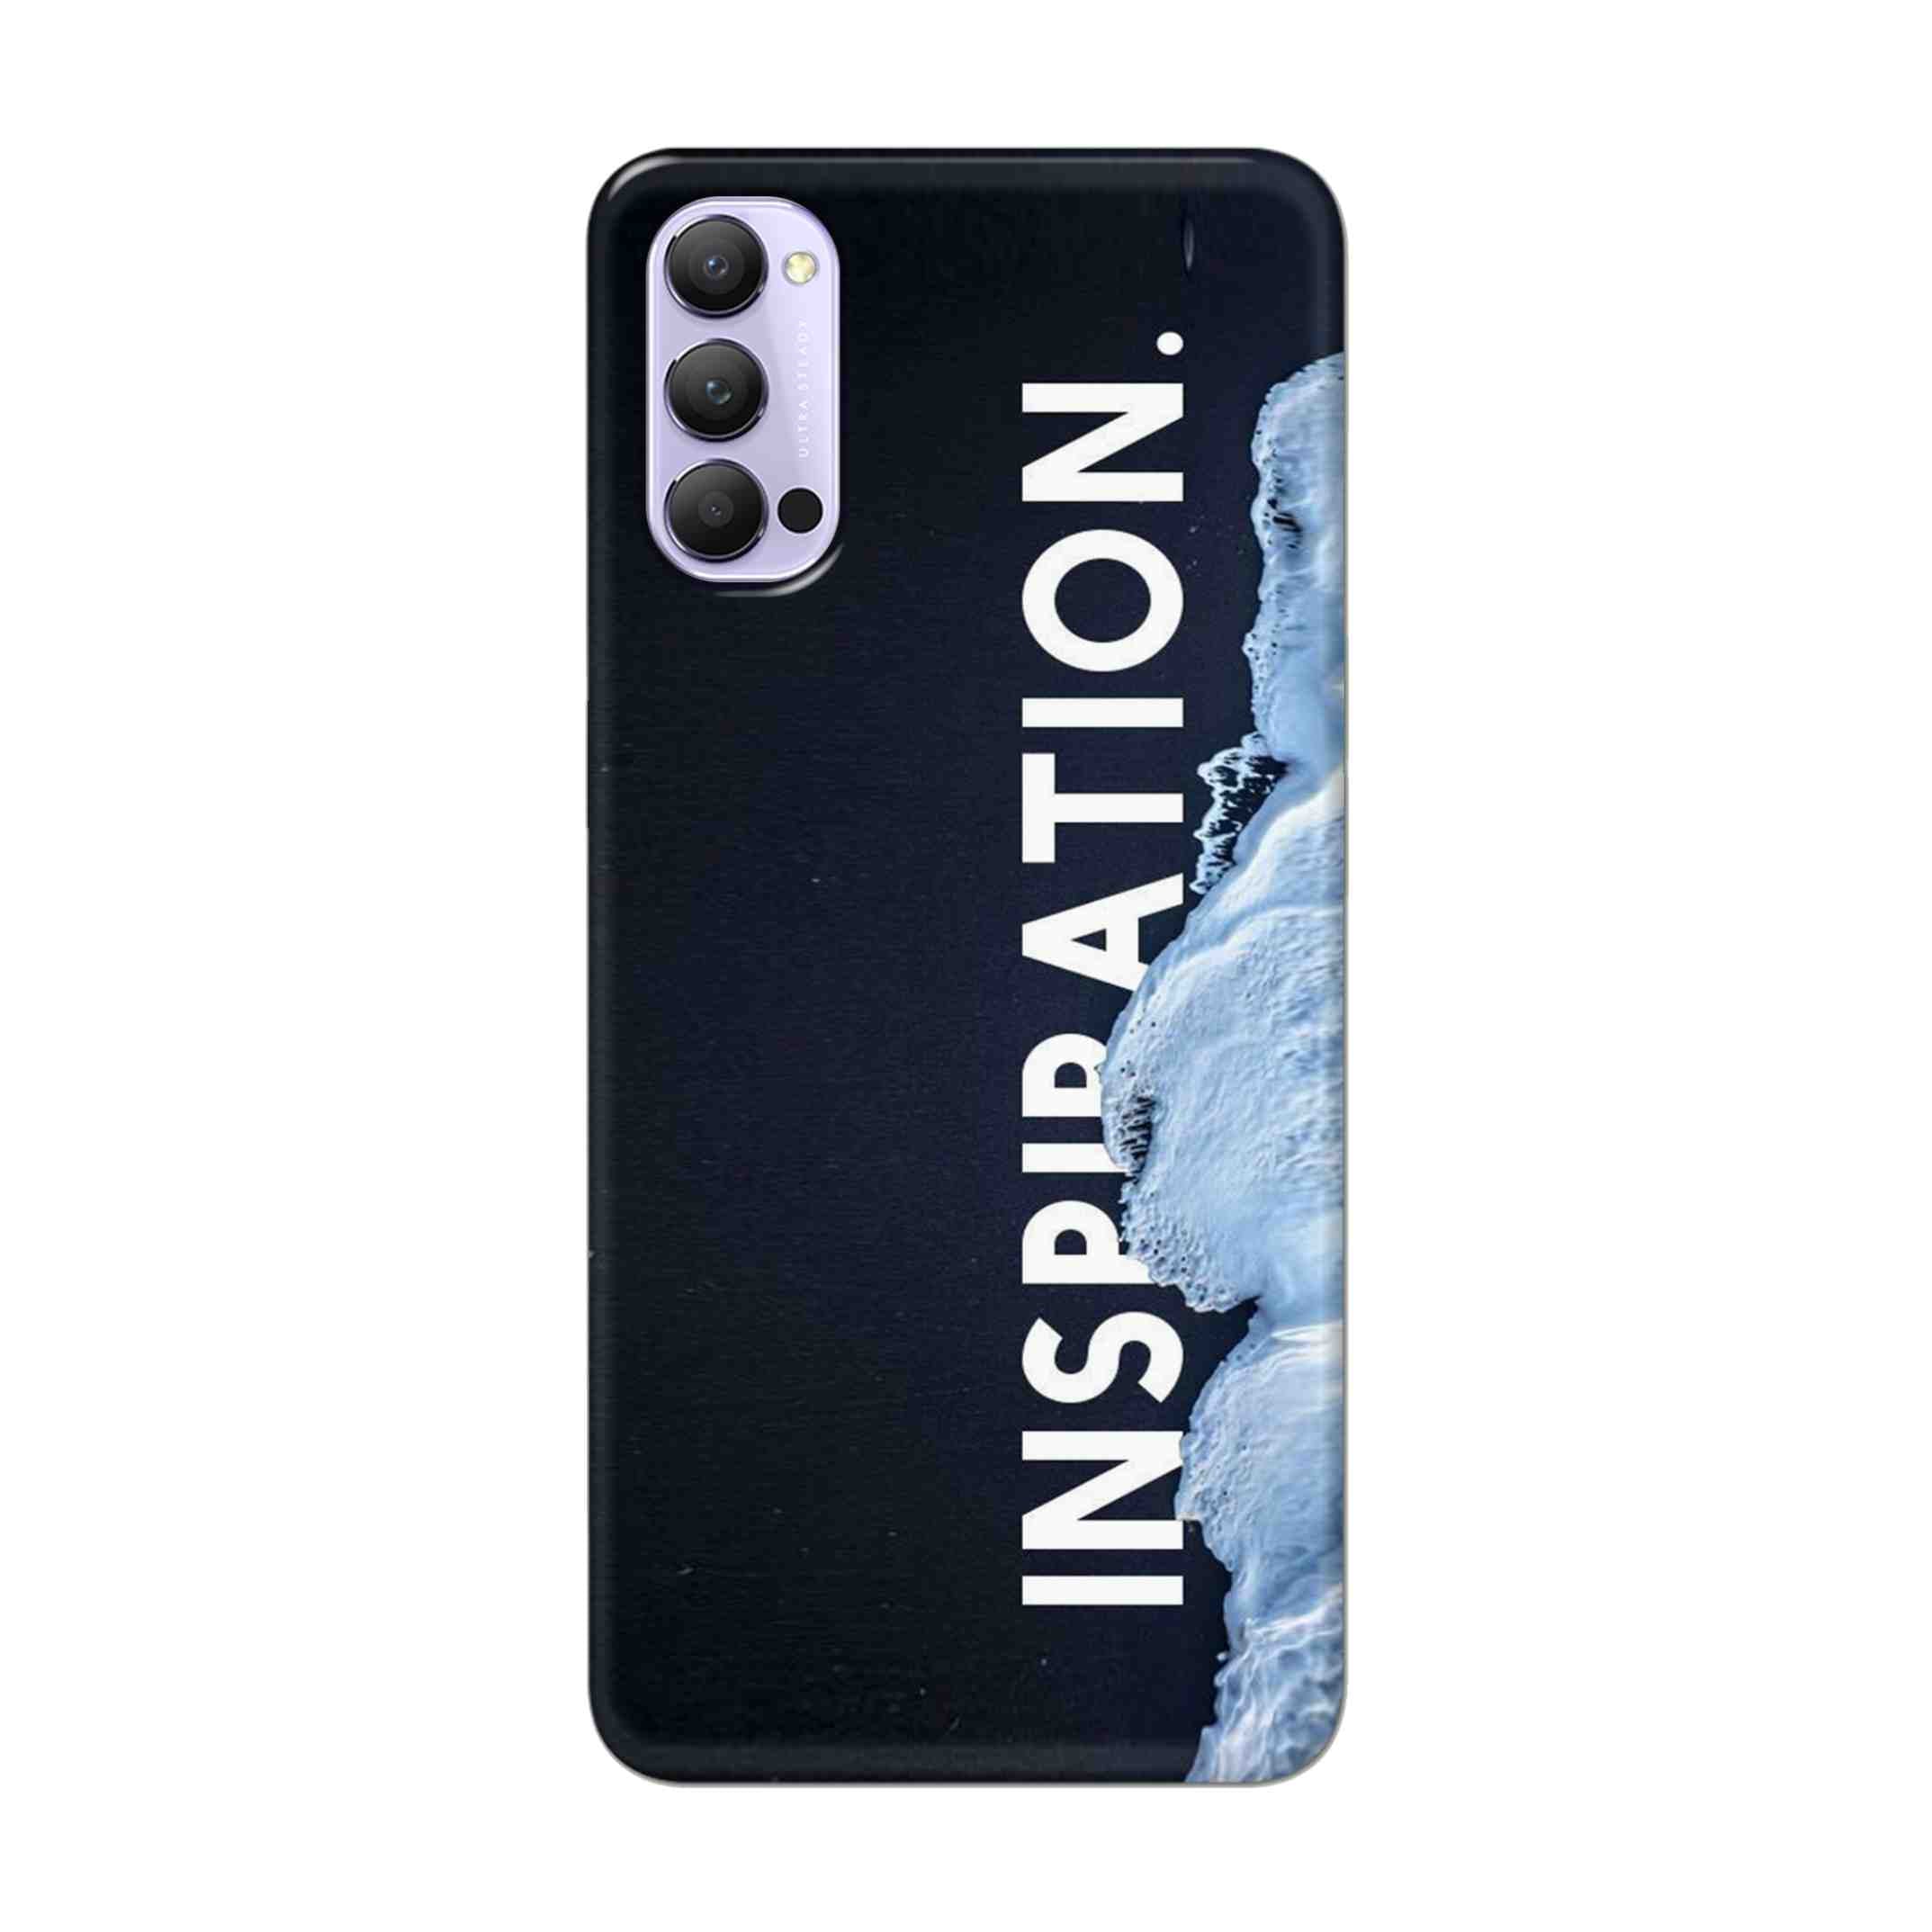 Buy Inspiration Hard Back Mobile Phone Case Cover For Oppo Reno 4 Pro Online